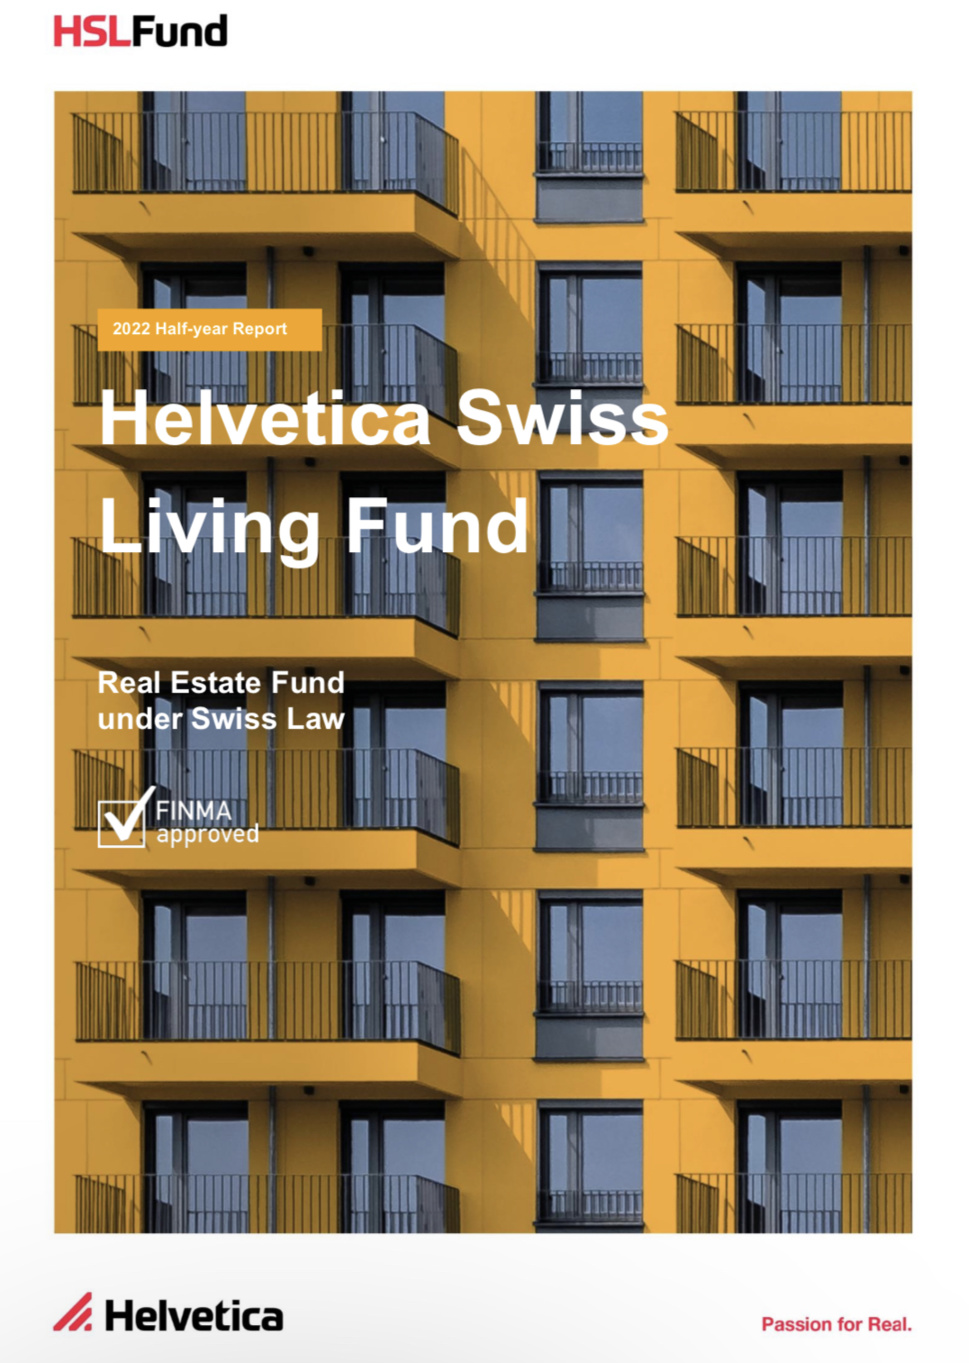 Helvetica Swiss Living Fund's real estate portfolio grows